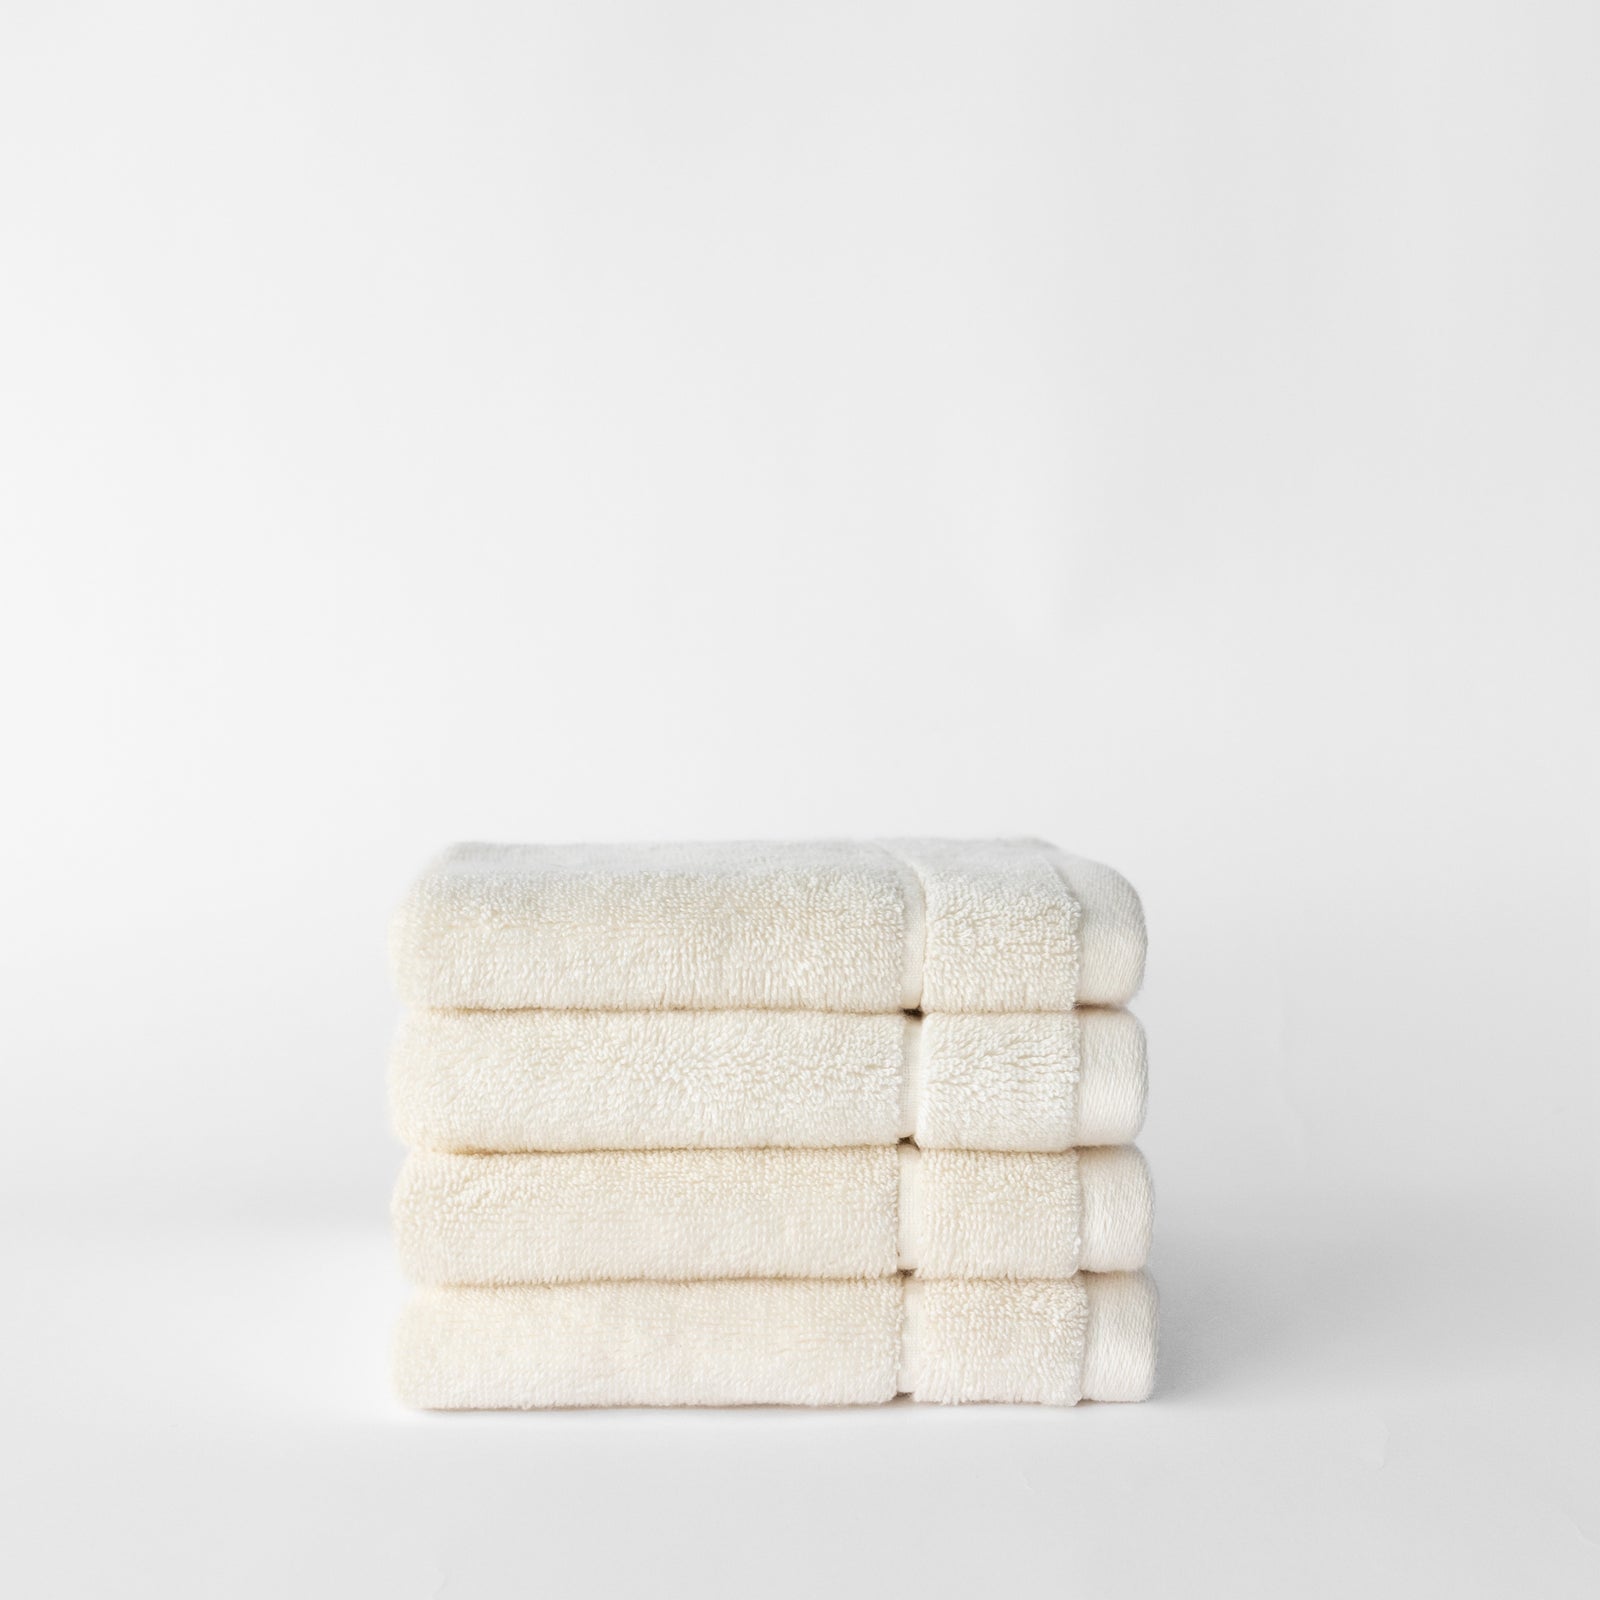 Creme Premium Plush Wash Cloths. Photo of Premium Plush Wash Cloths taken with white background 